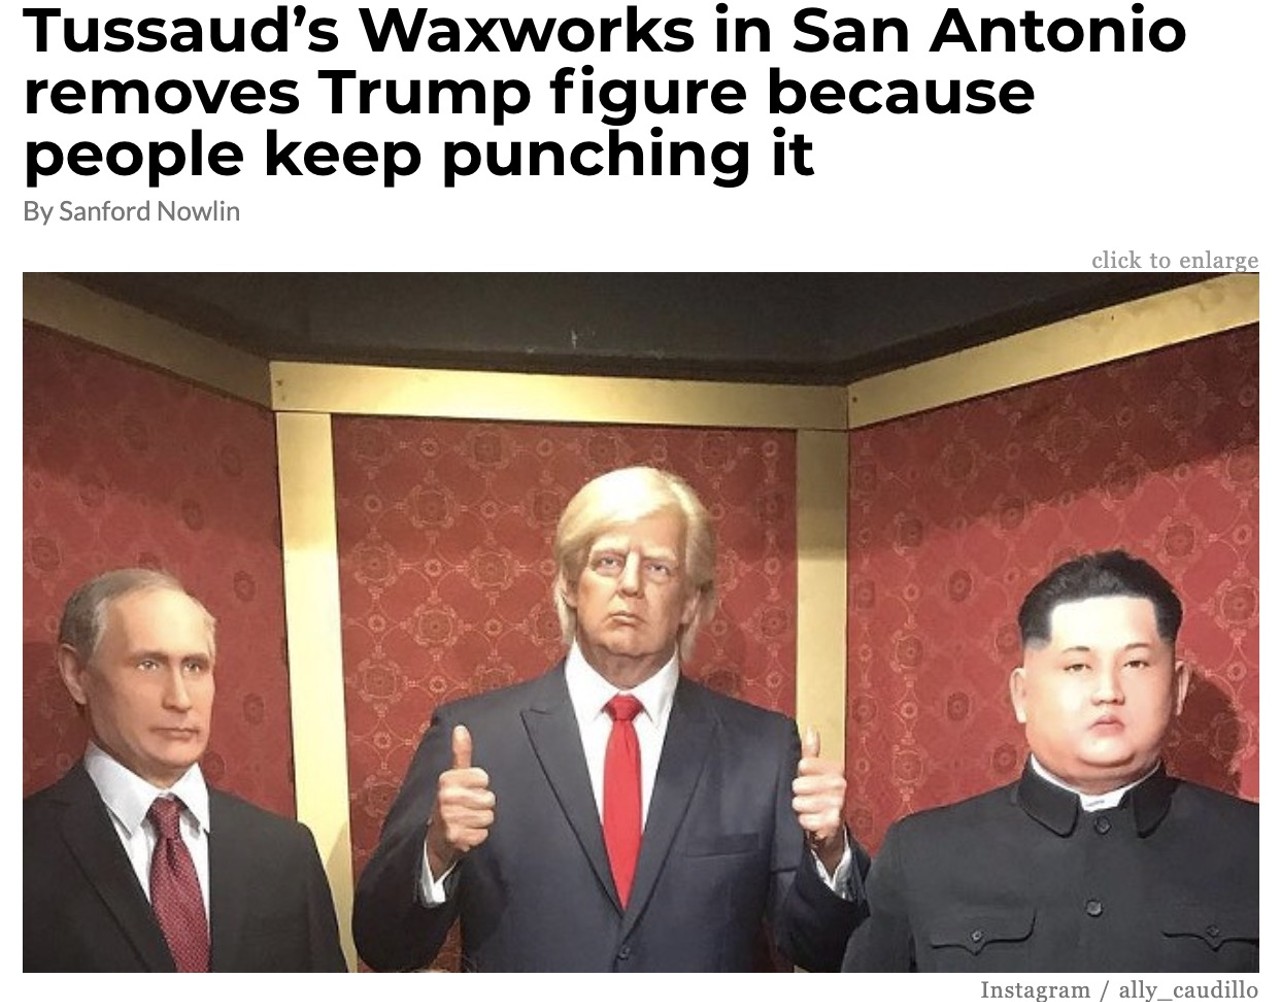 6. Tussaud’s Waxworks in San Antonio removes Trump figure because people keep punching it 